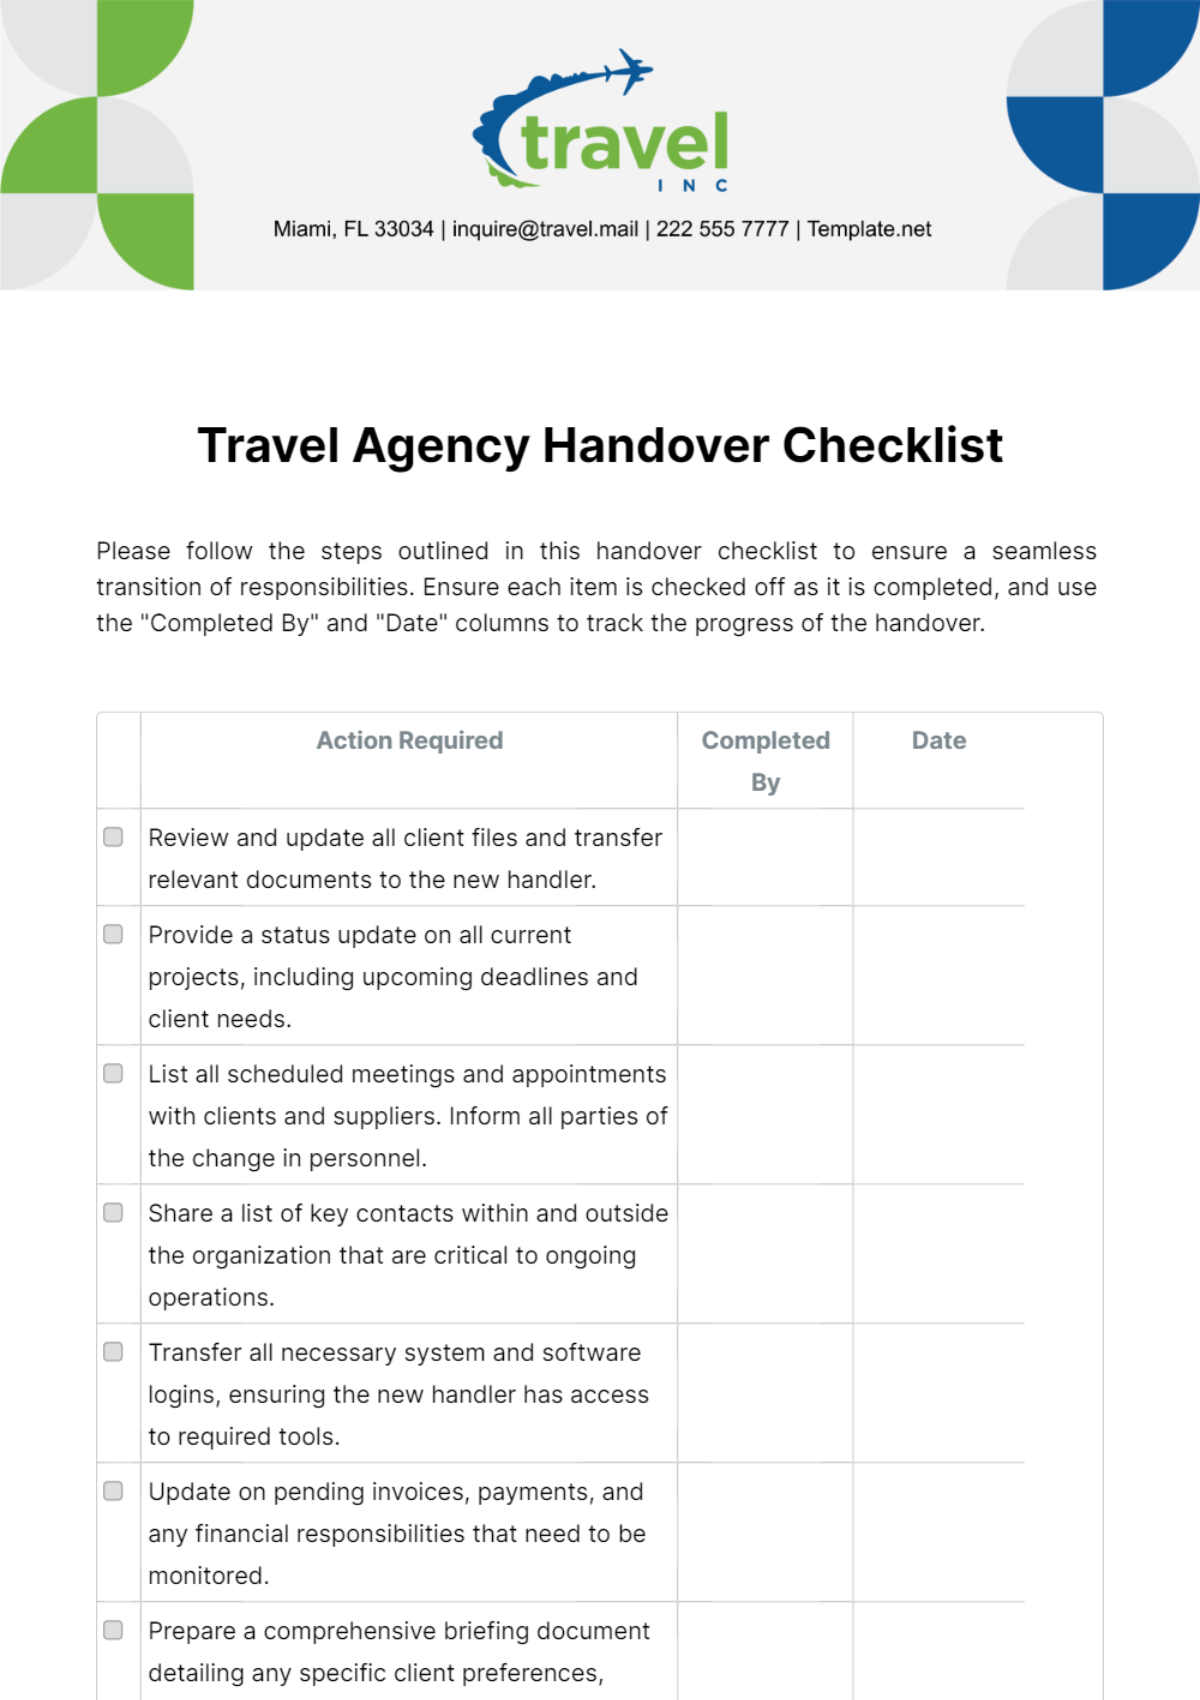 Travel Agency Handover Checklist Template